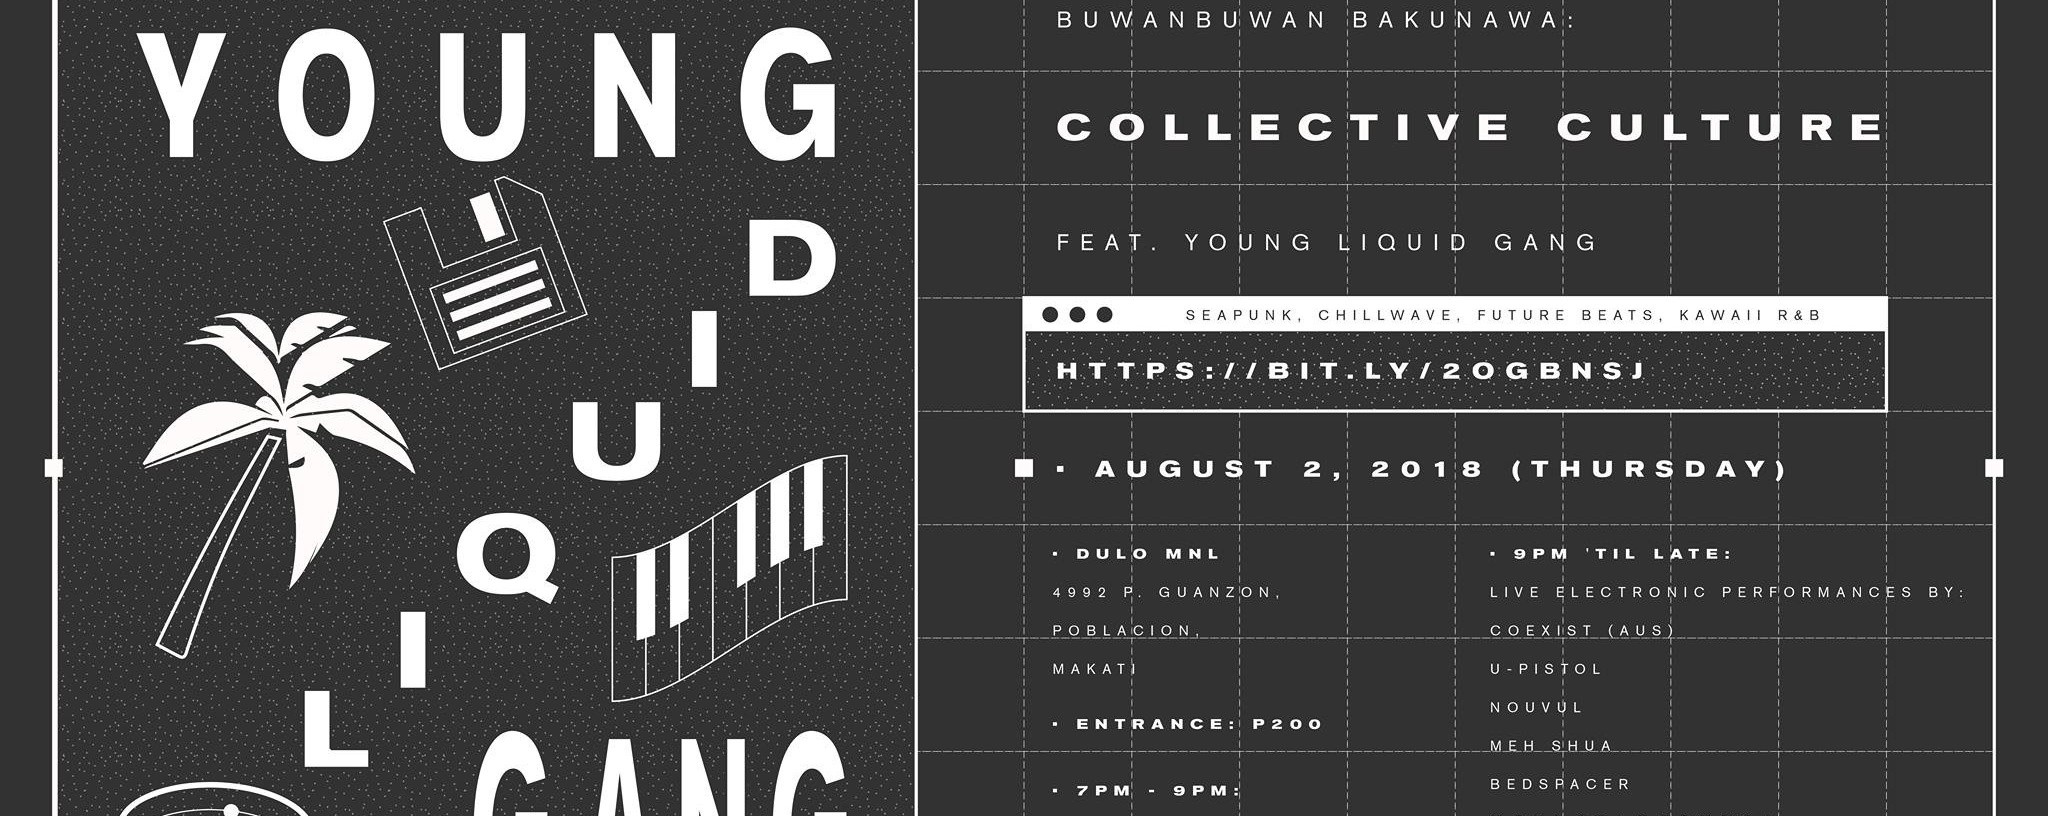 BuwanBuwan Bakunawa: Collective Culture feat. Young Liquid Gang